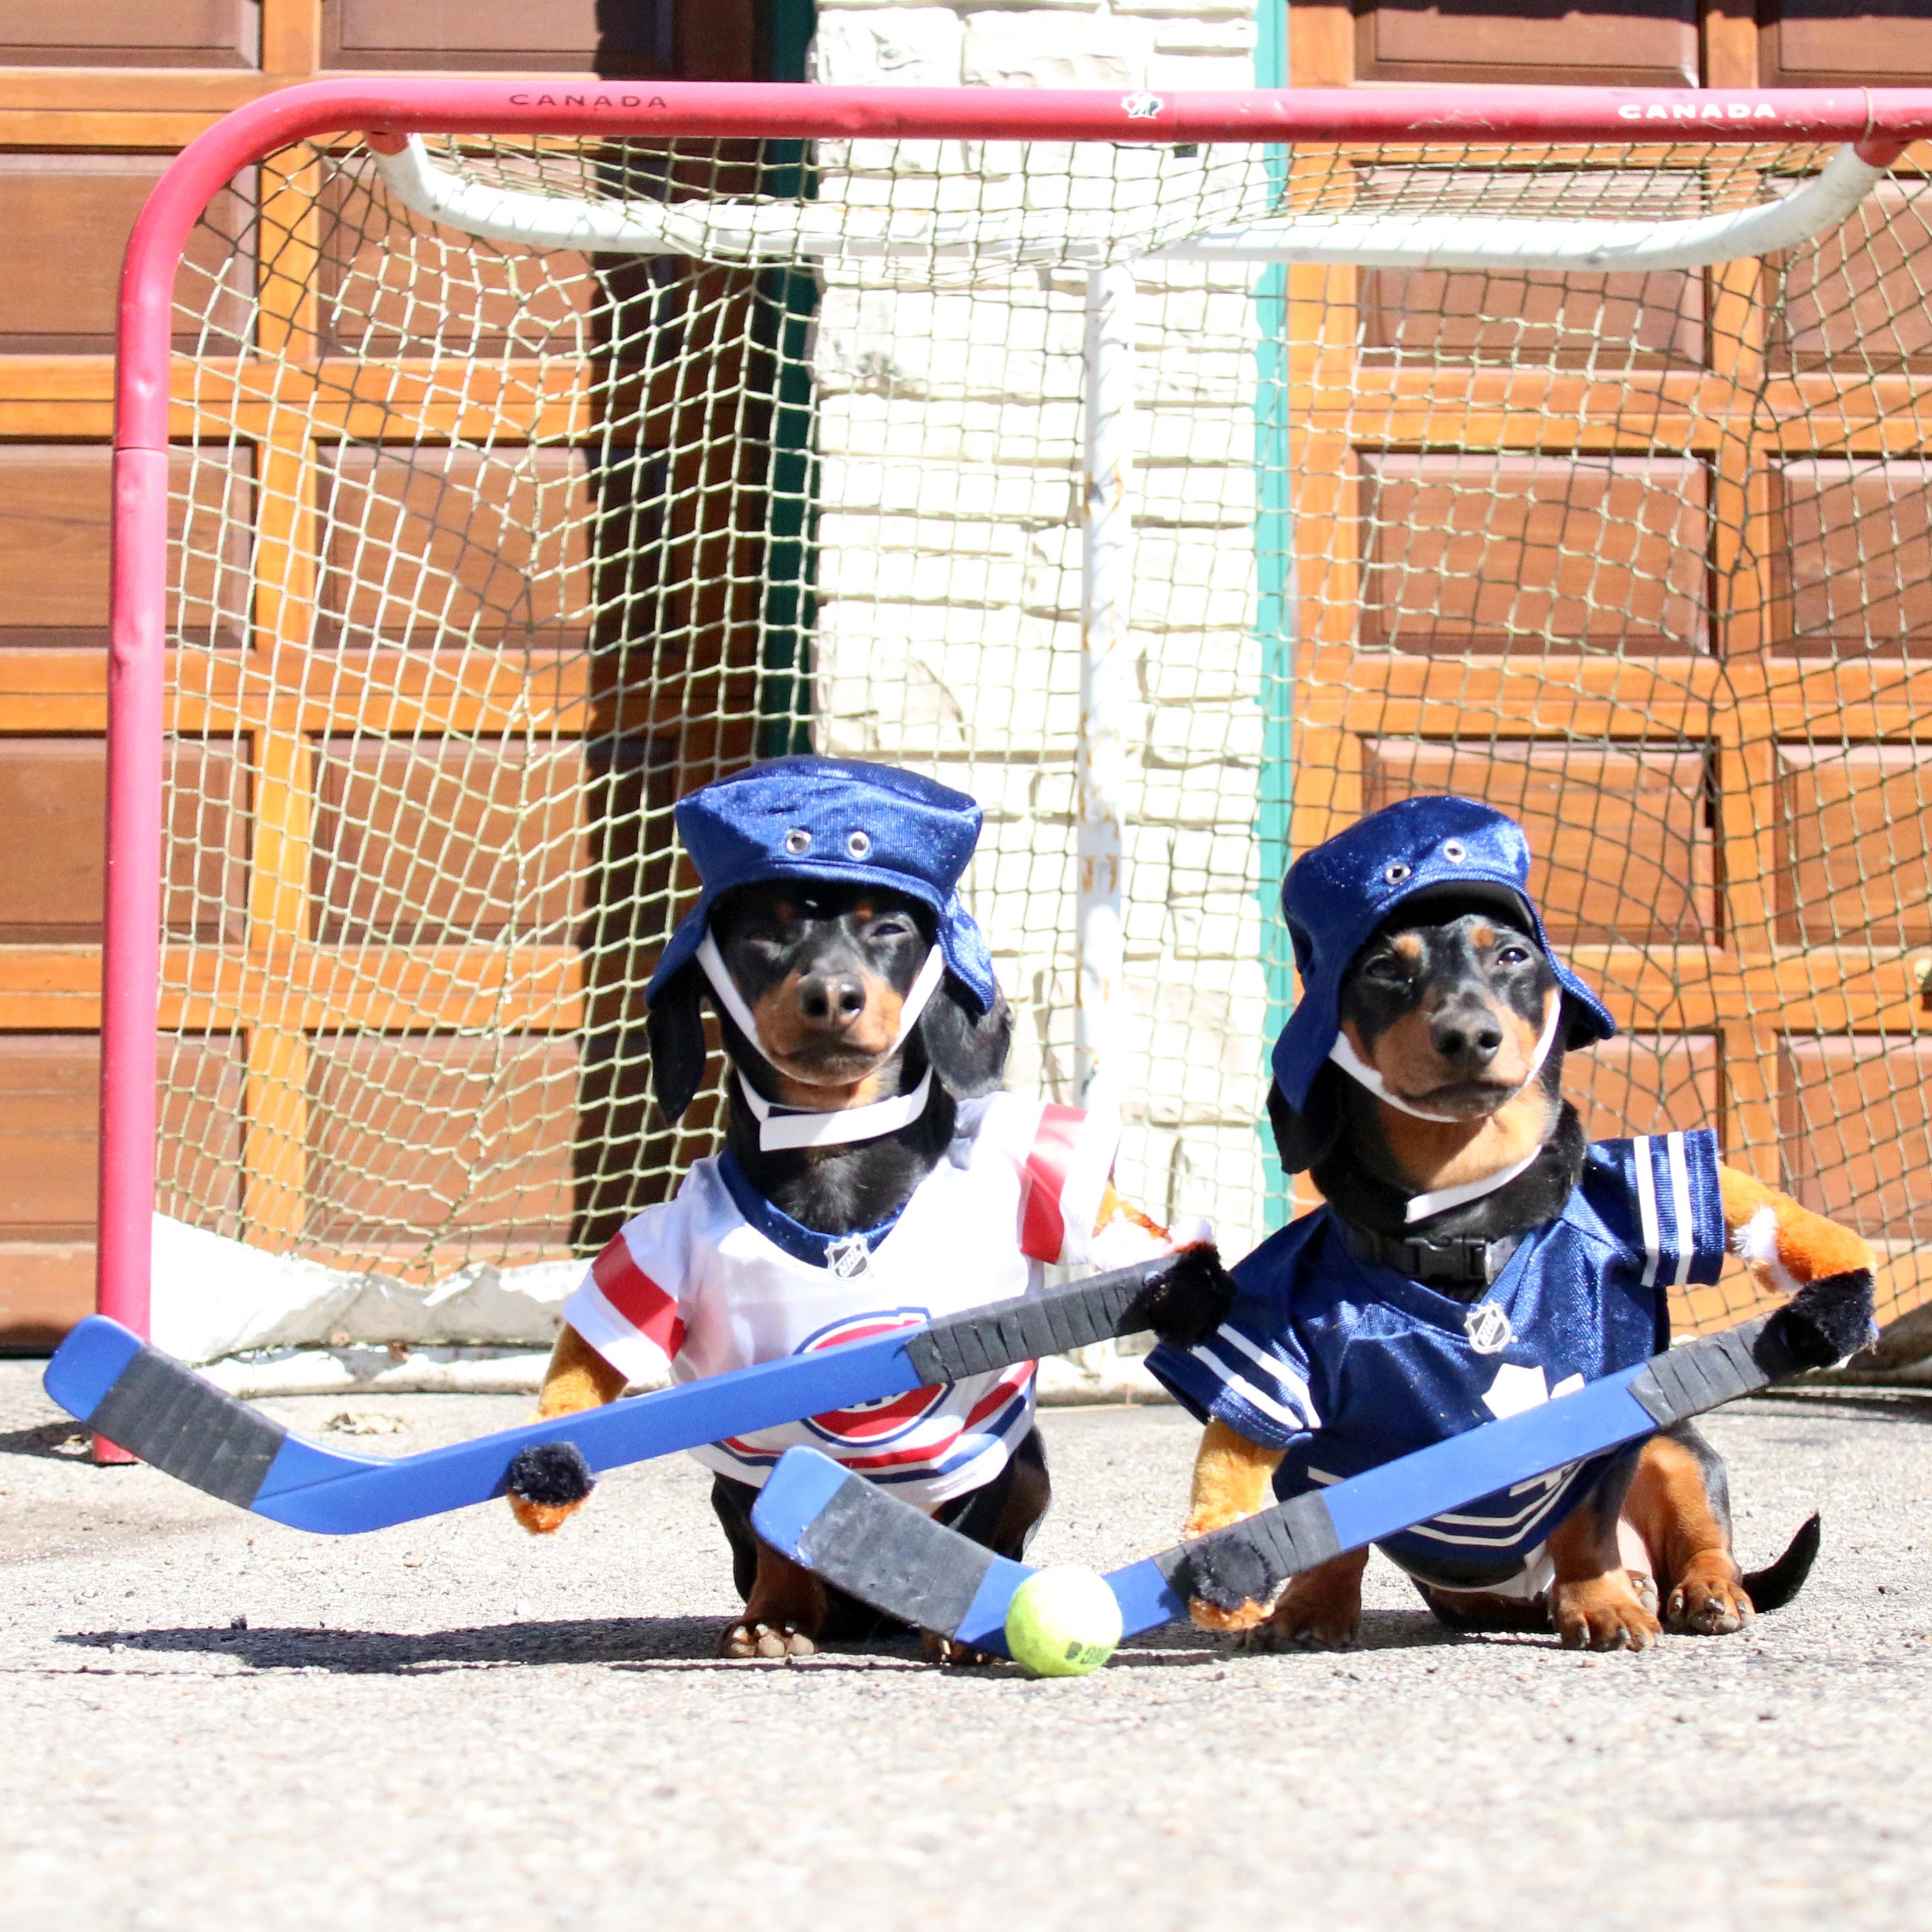 It's 2016 & wiener dogs now play ball hockey